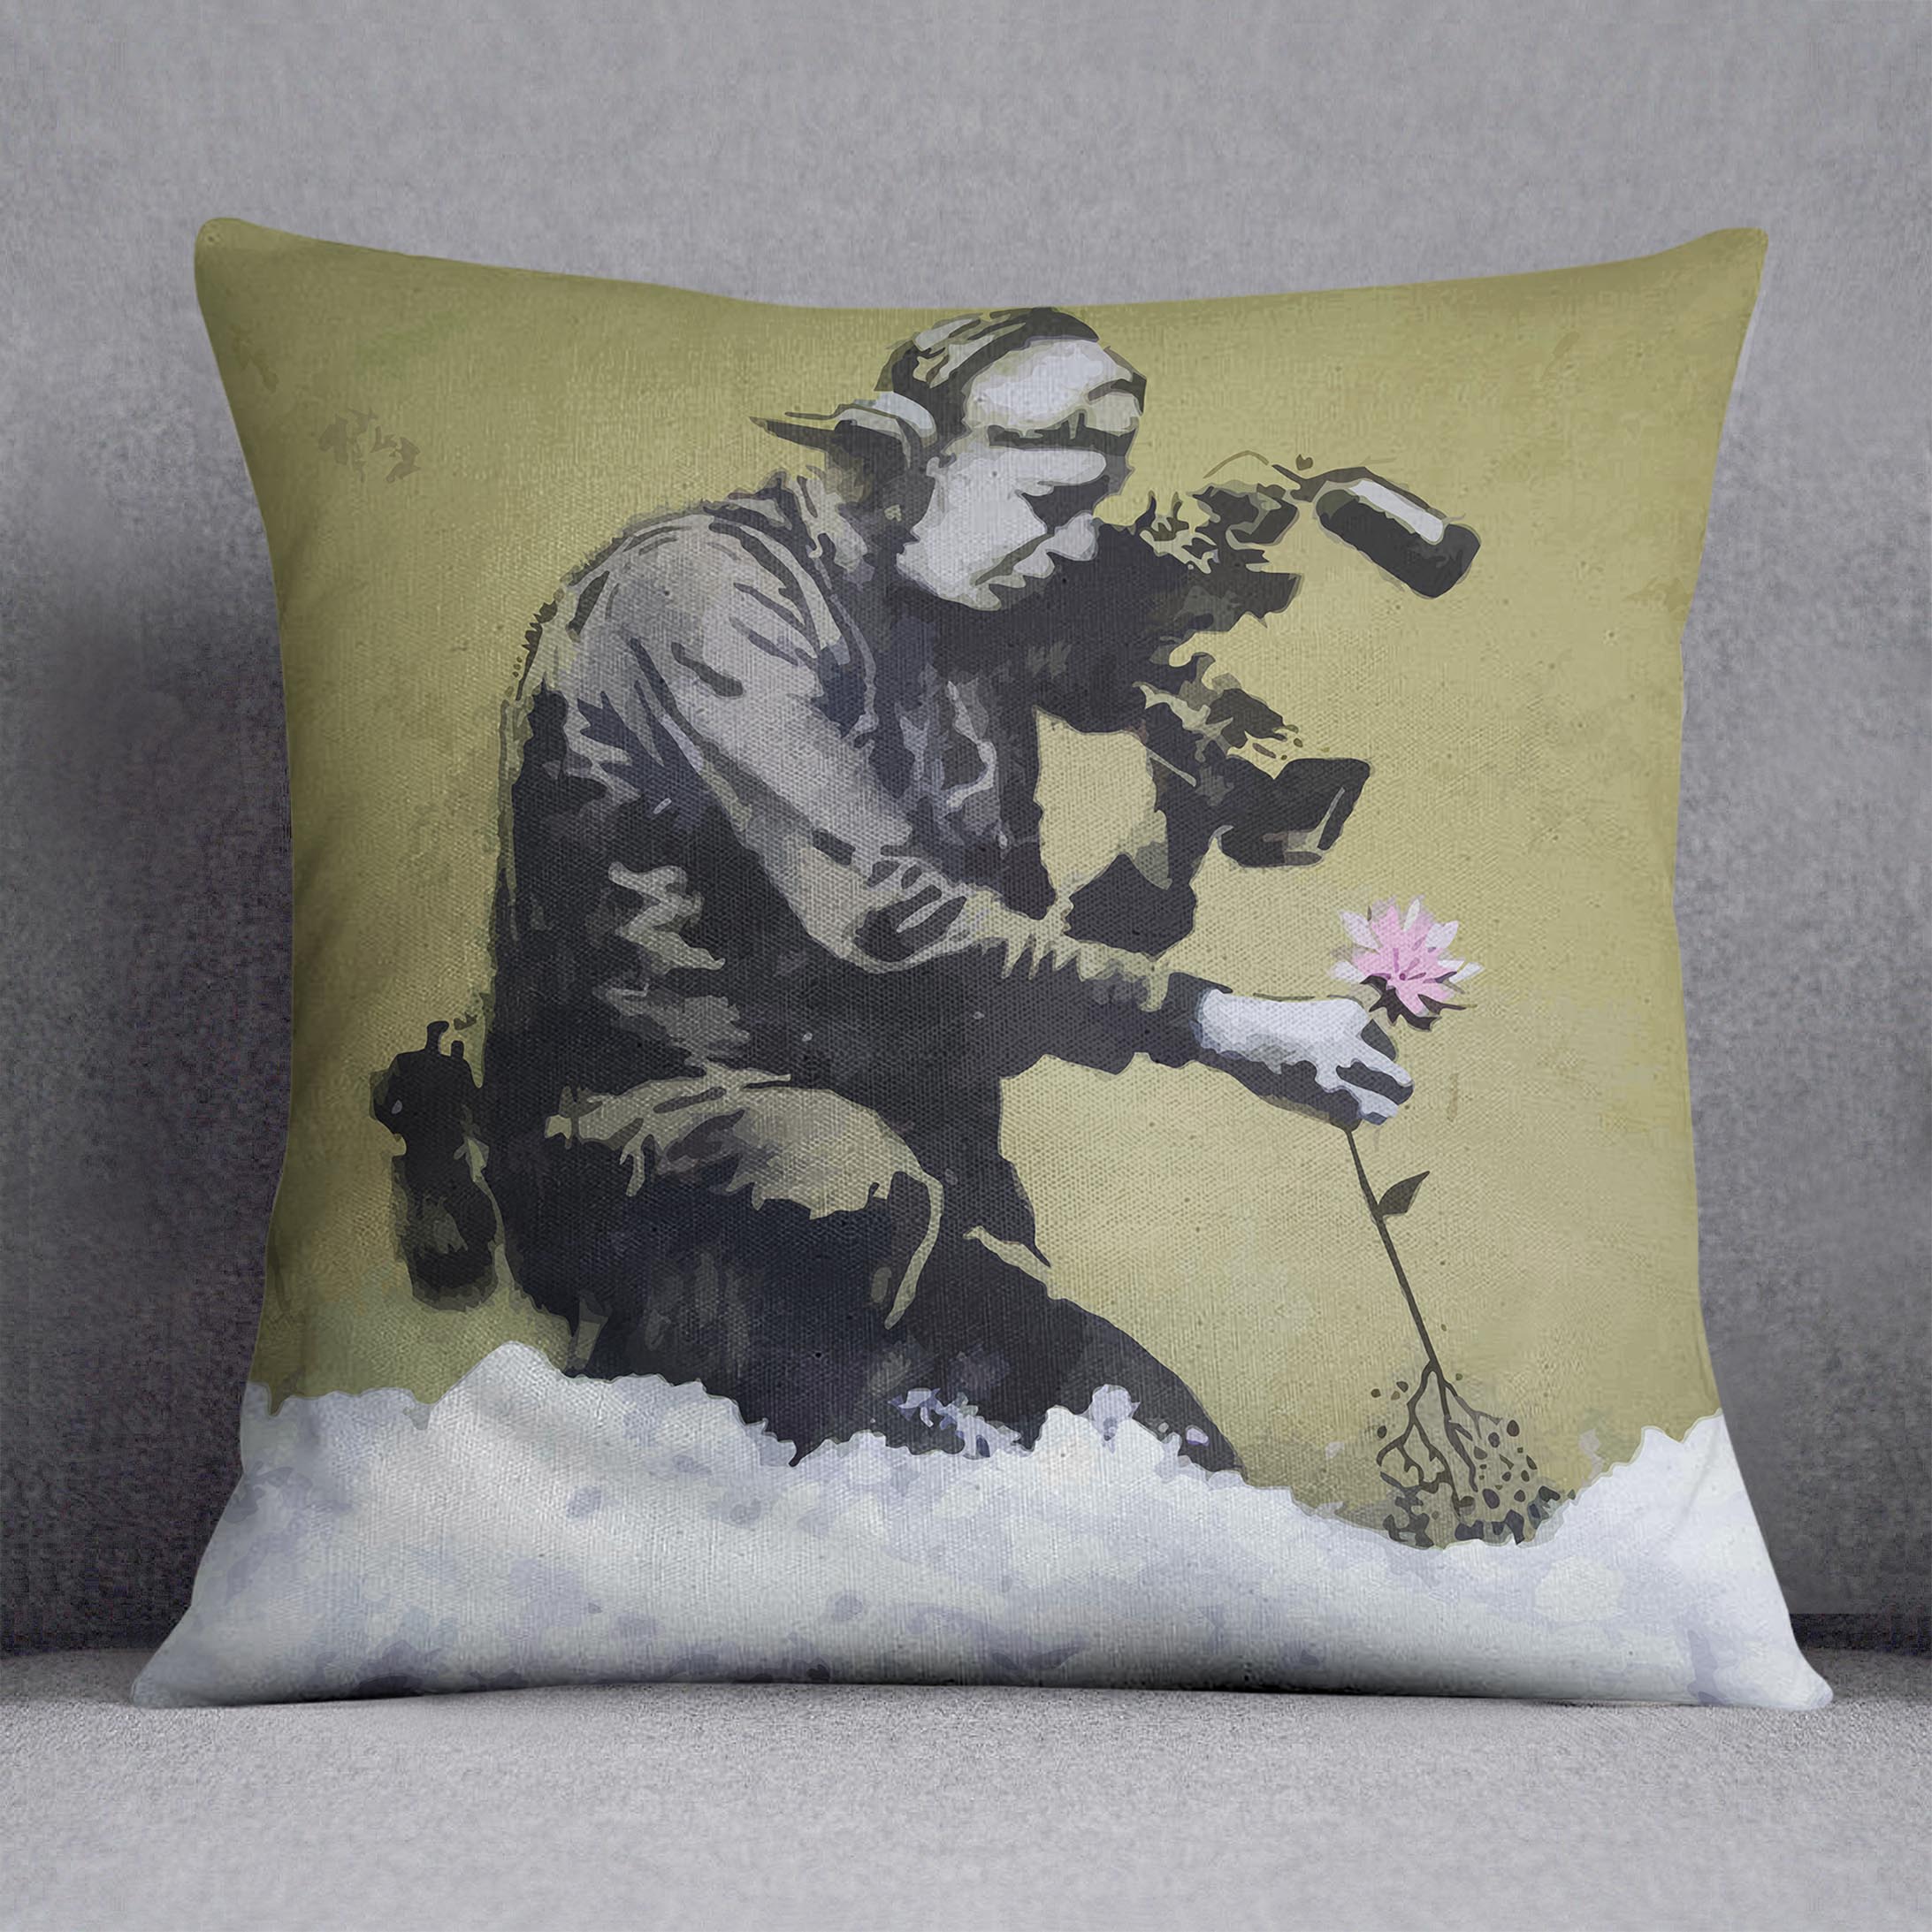 Banksy Cameraman and Flower Cushion